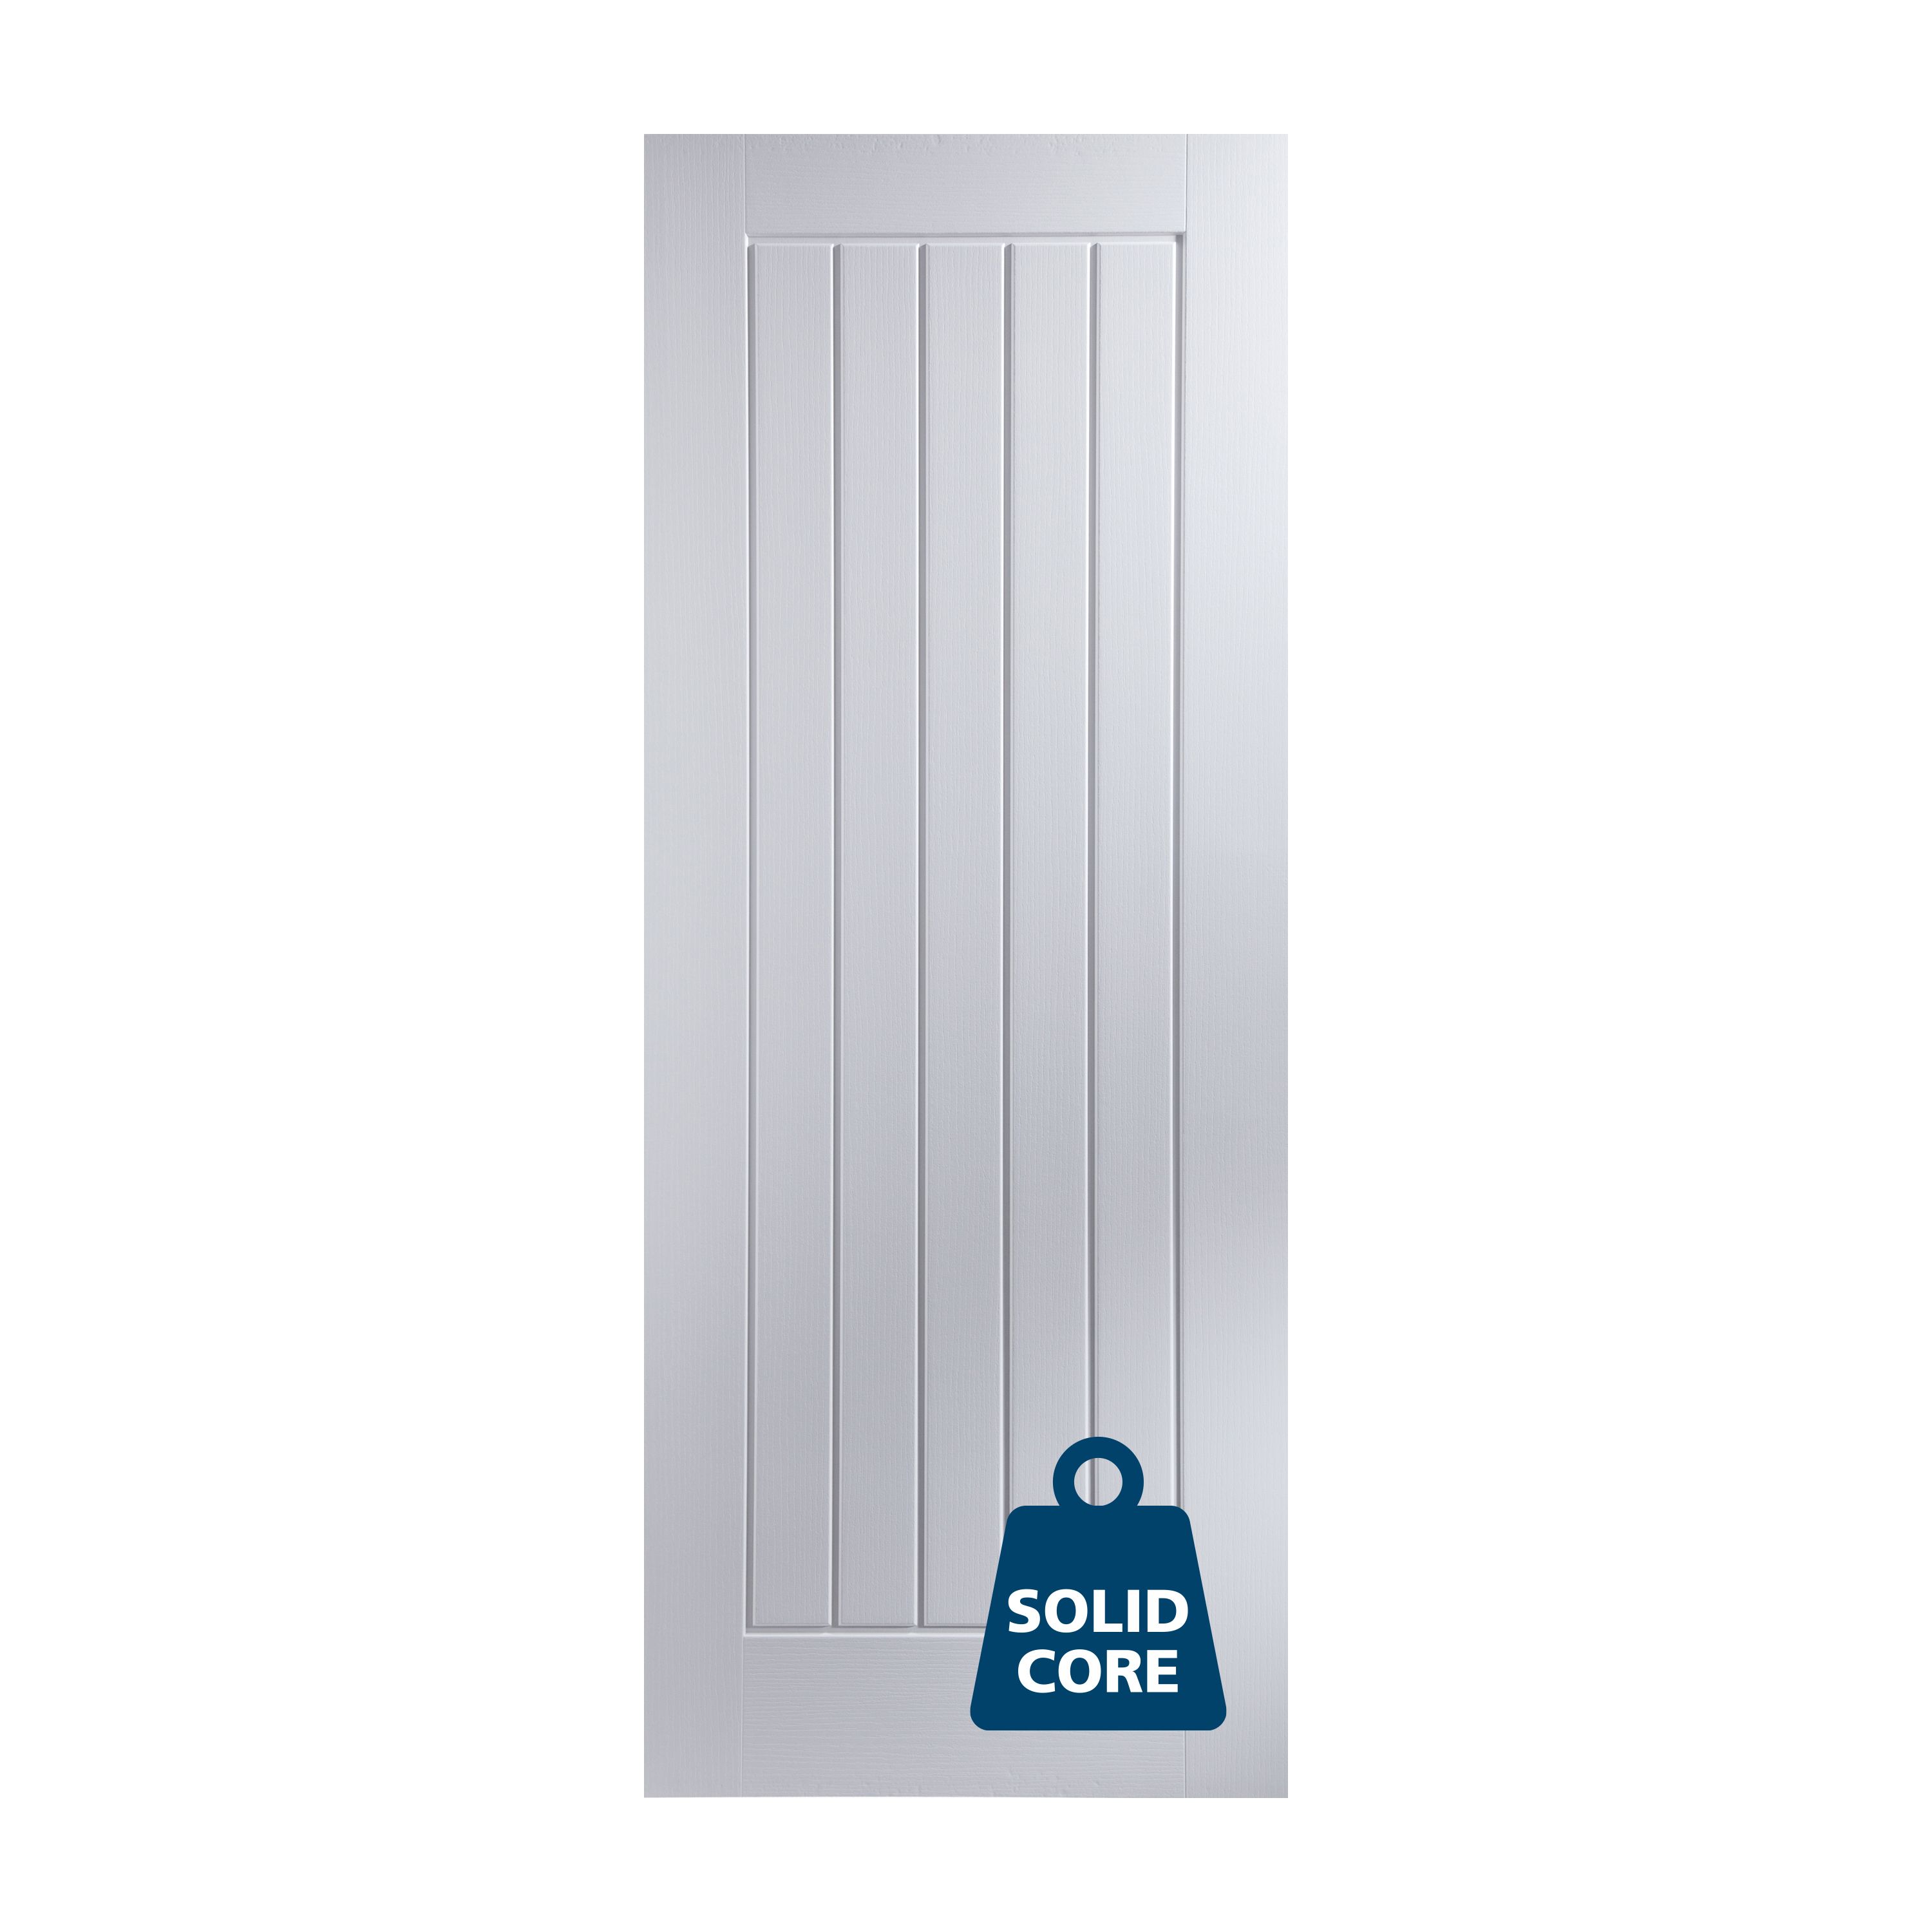 Jeld-Wen Cottage Solid core Unglazed Cottage White Woodgrain effect Internal Door, (H)1981mm (W)838mm (T)35mm